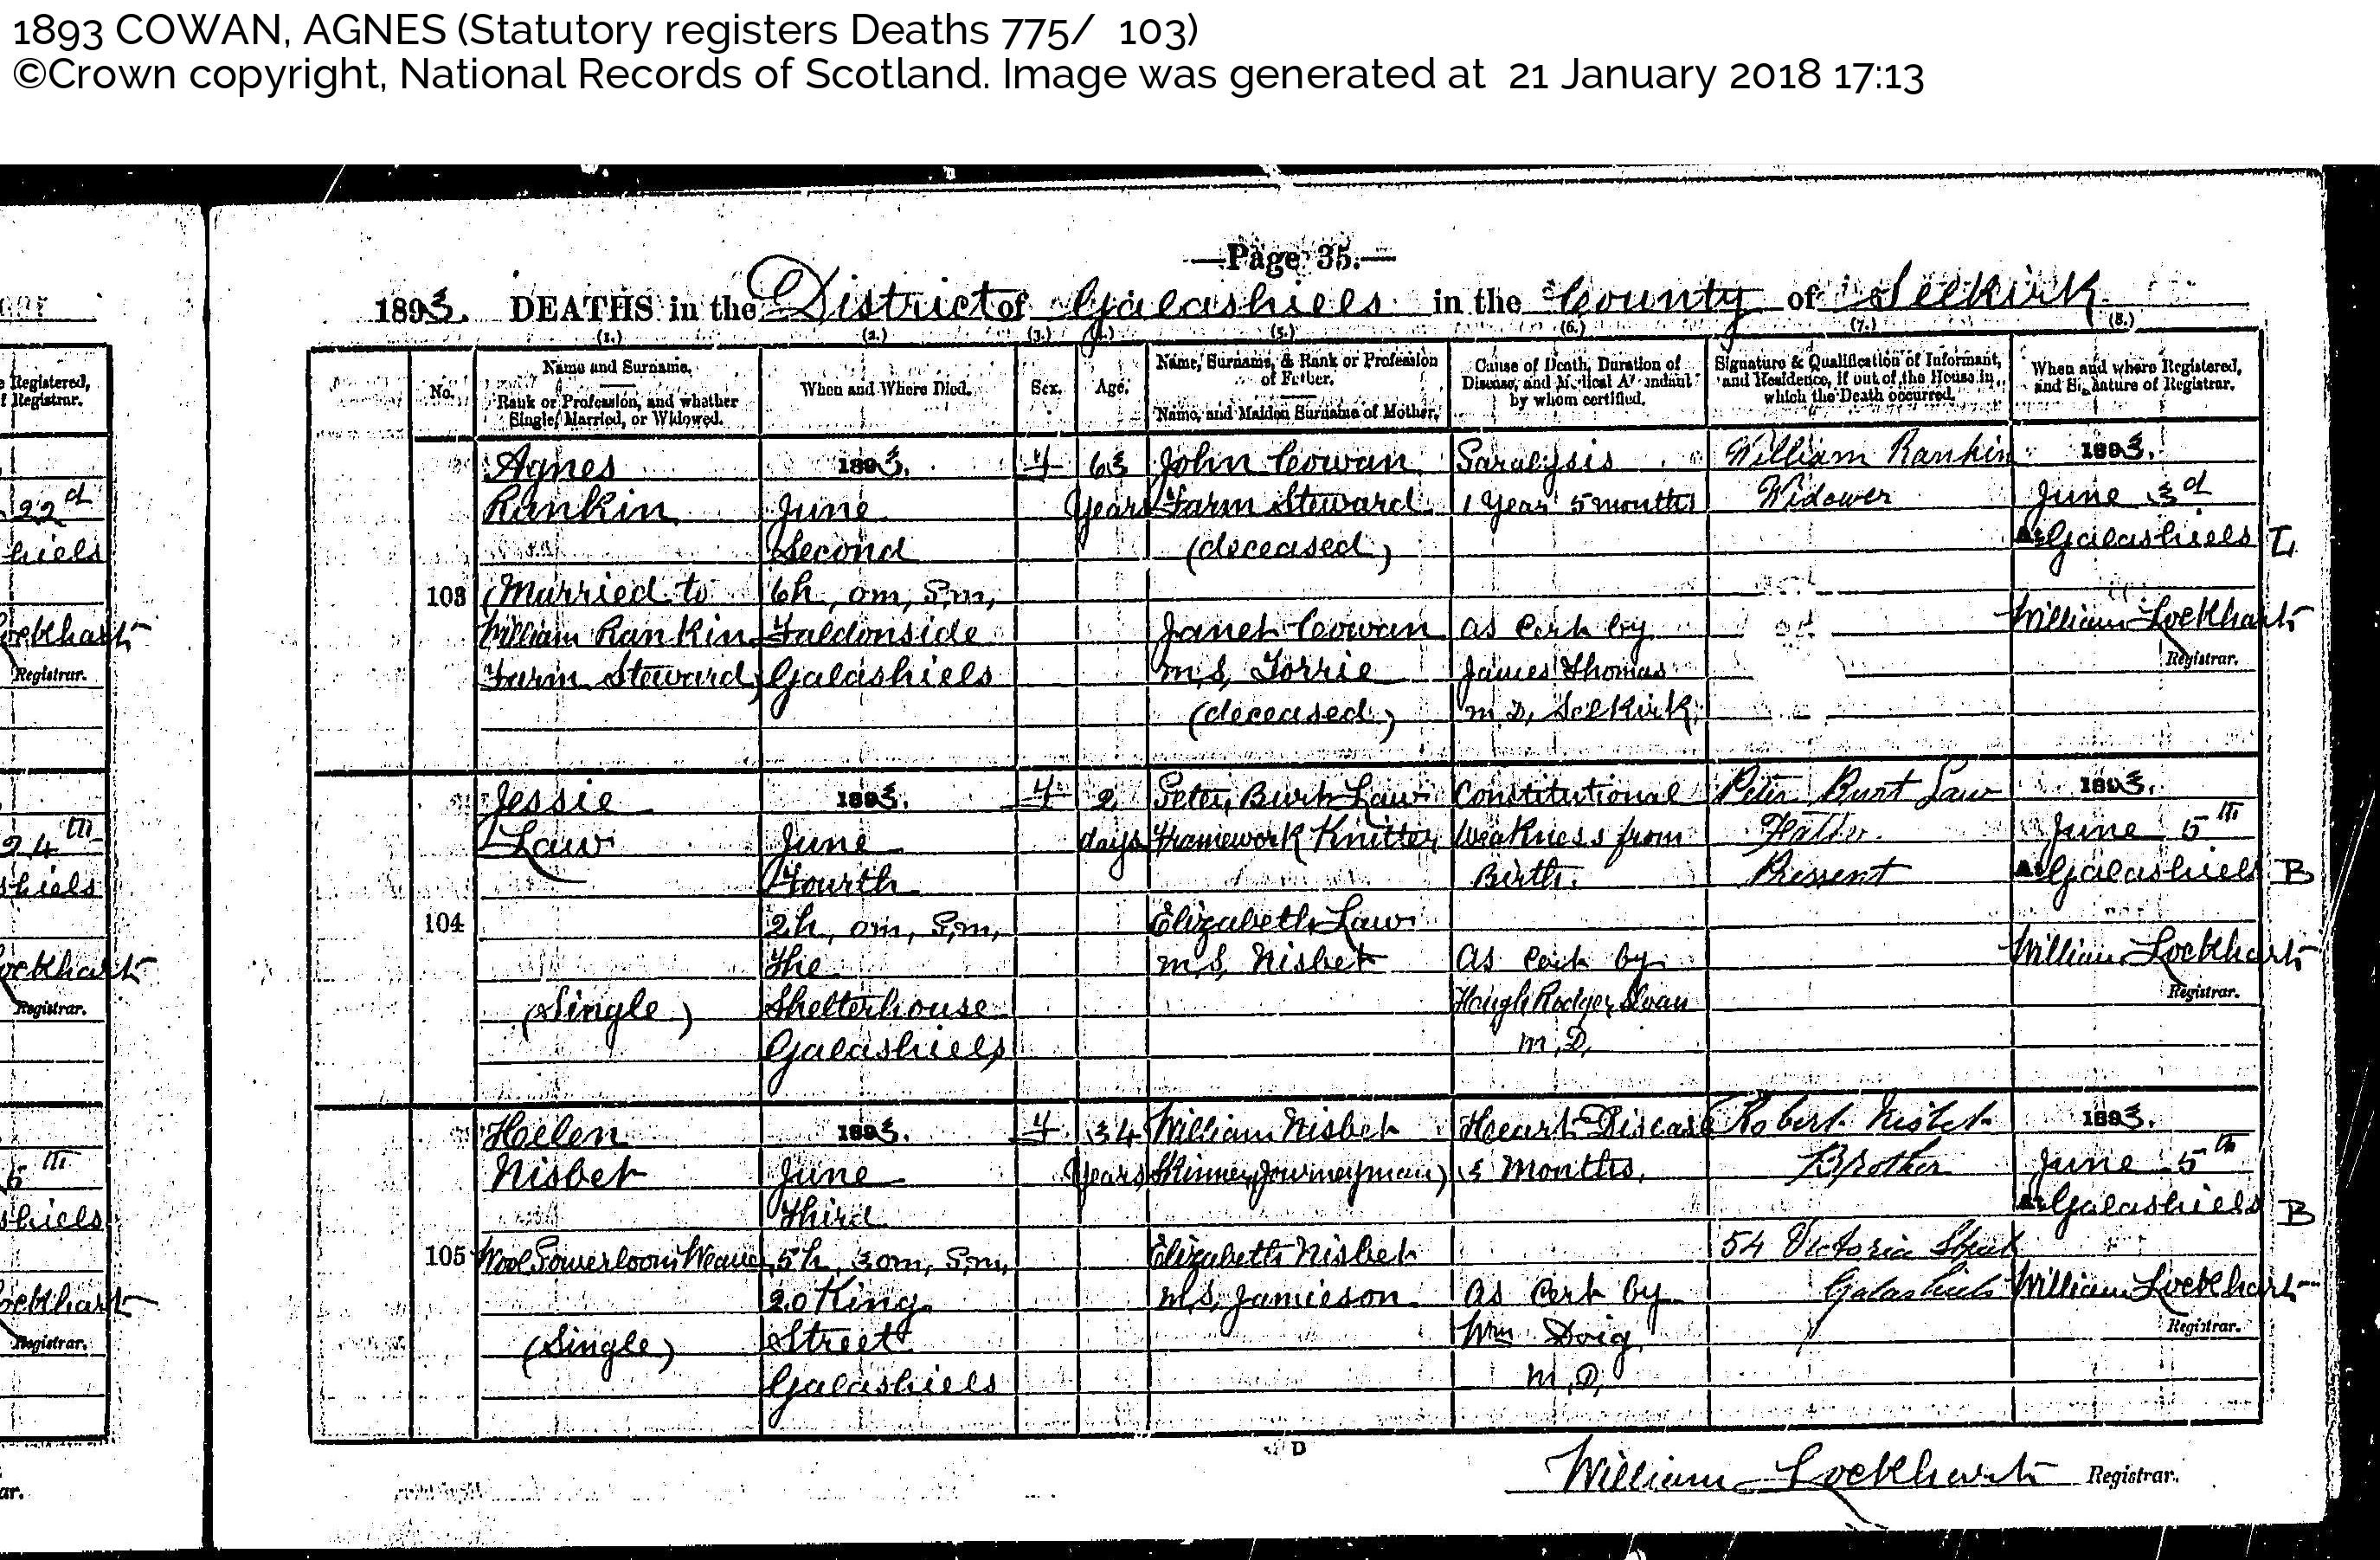 AgnesCowan(Rankin)_D1893 Galashiels, June 2, 1893, Linked To: <a href='profiles/i1596.html' >William Rankin</a> and <a href='profiles/i1590.html' >Agnes Cowan 🧬</a>